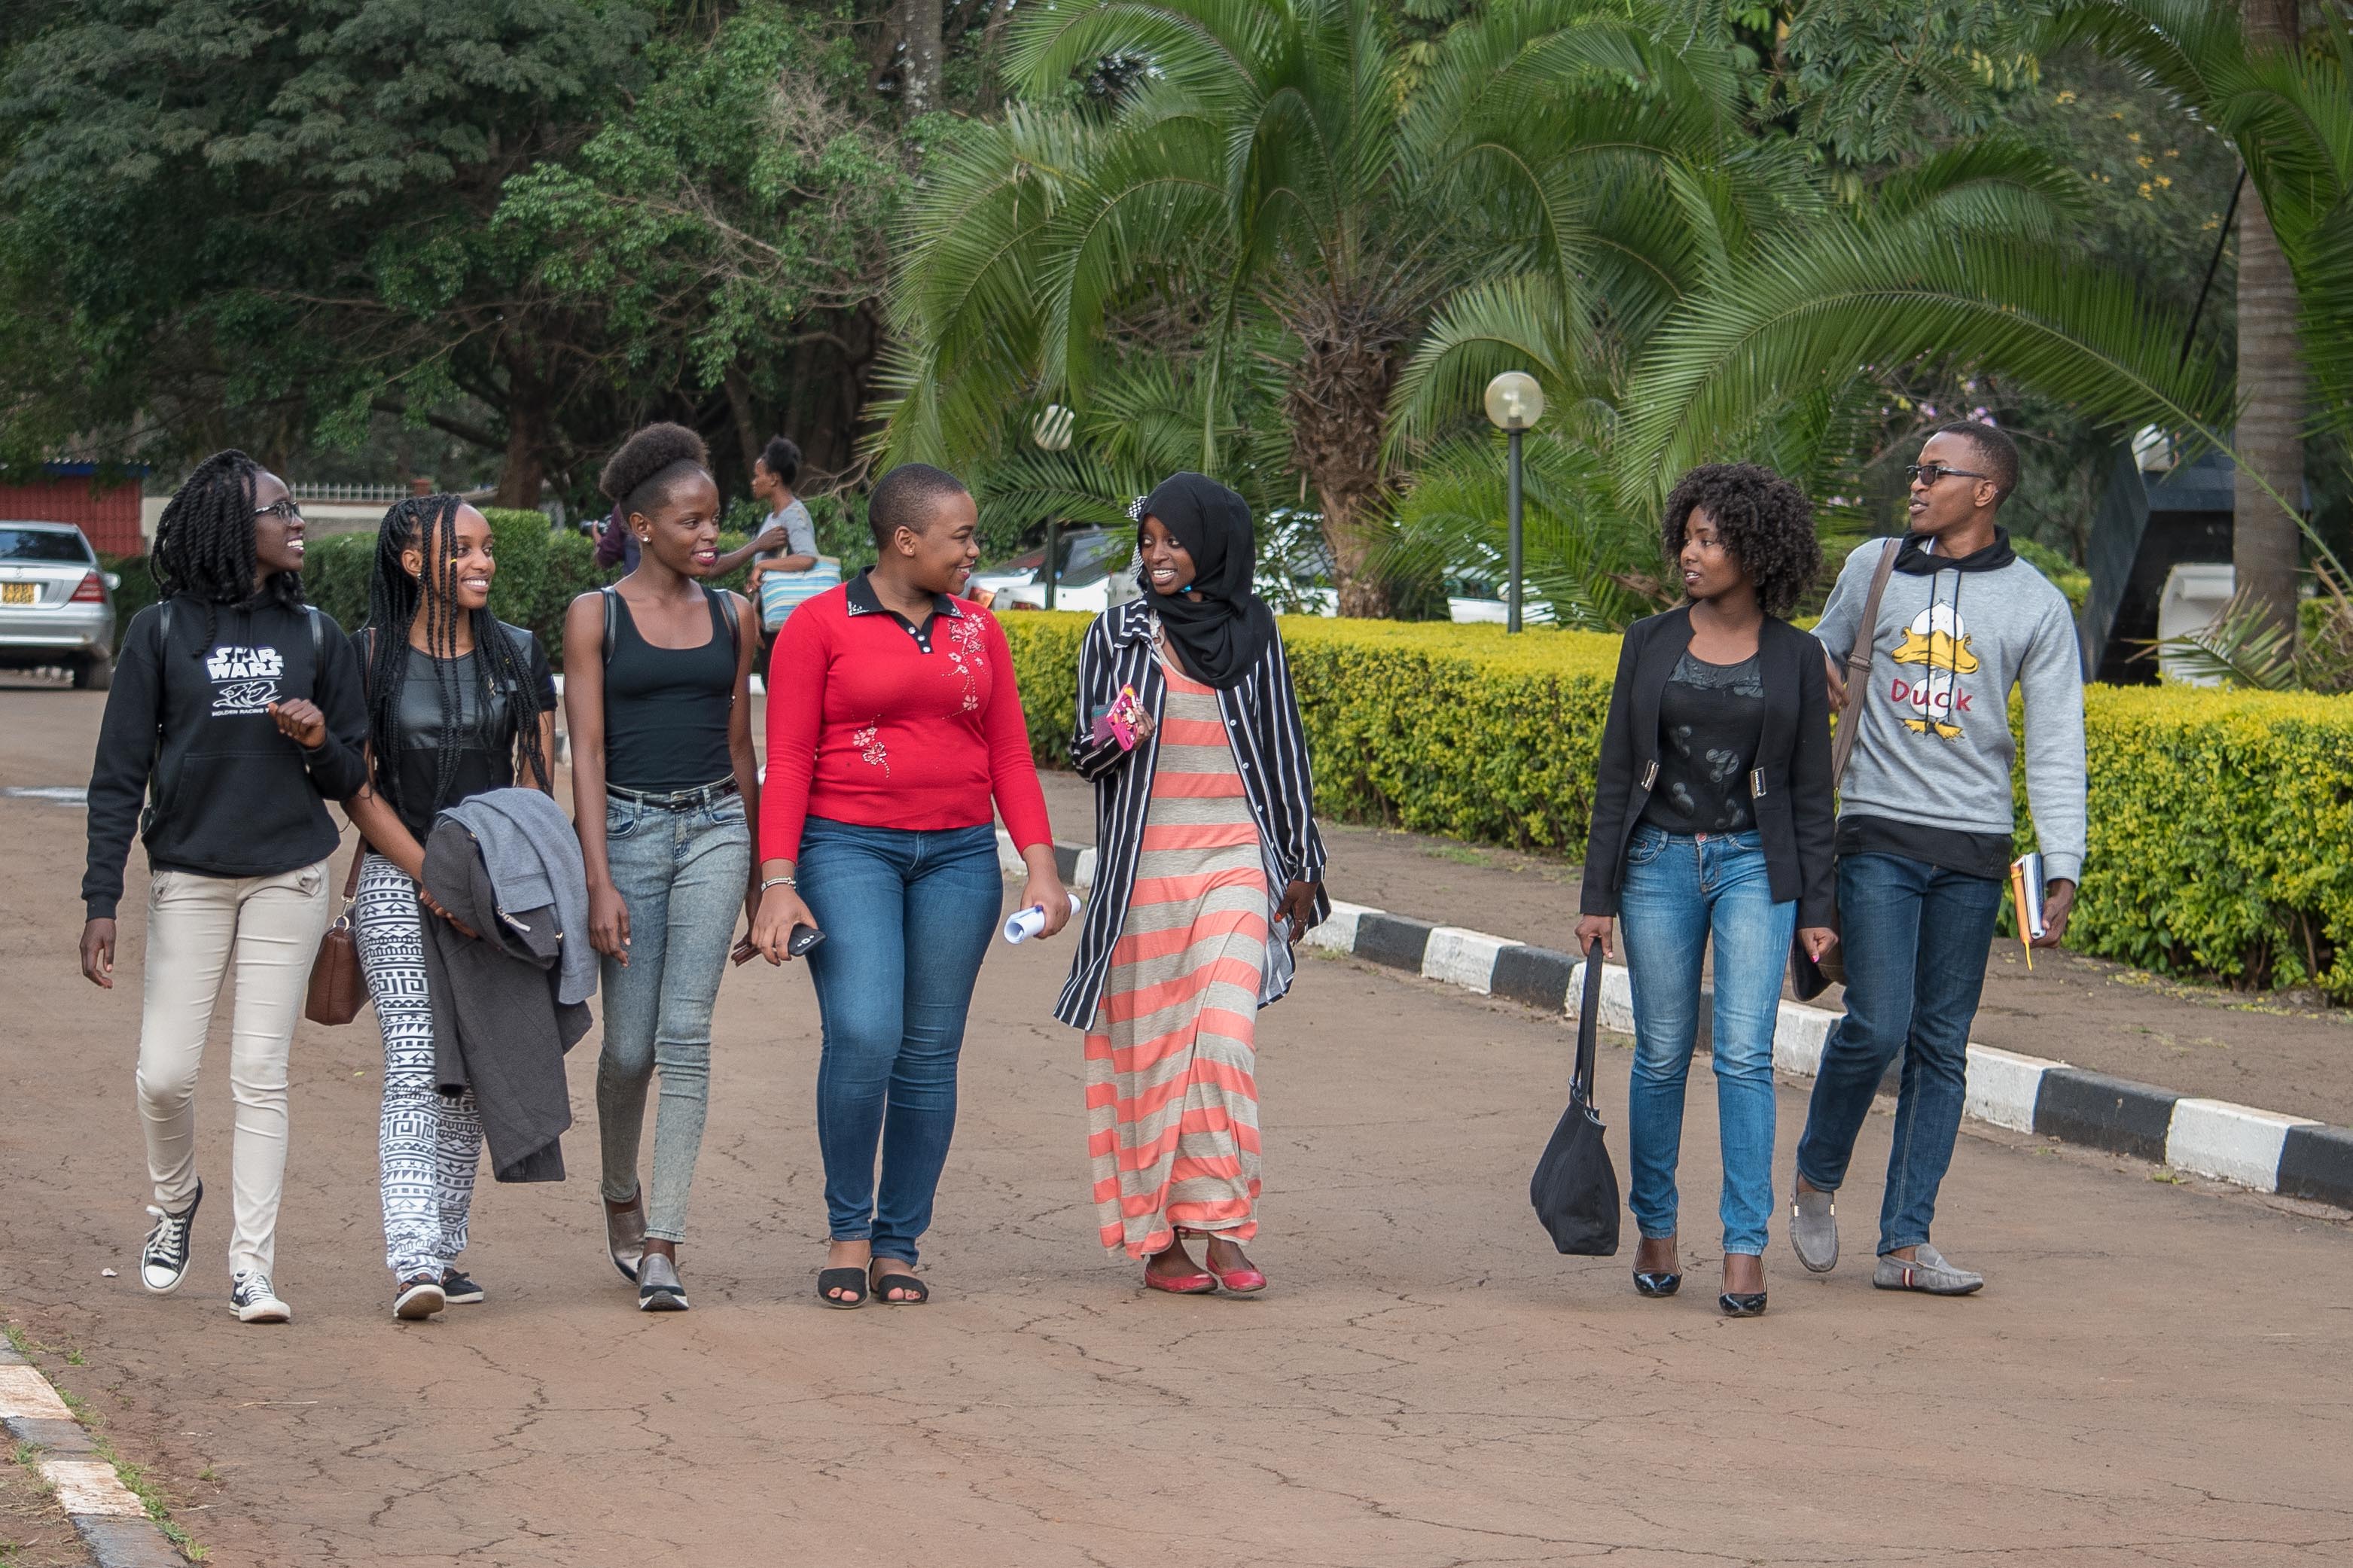 Students at university in Kenya